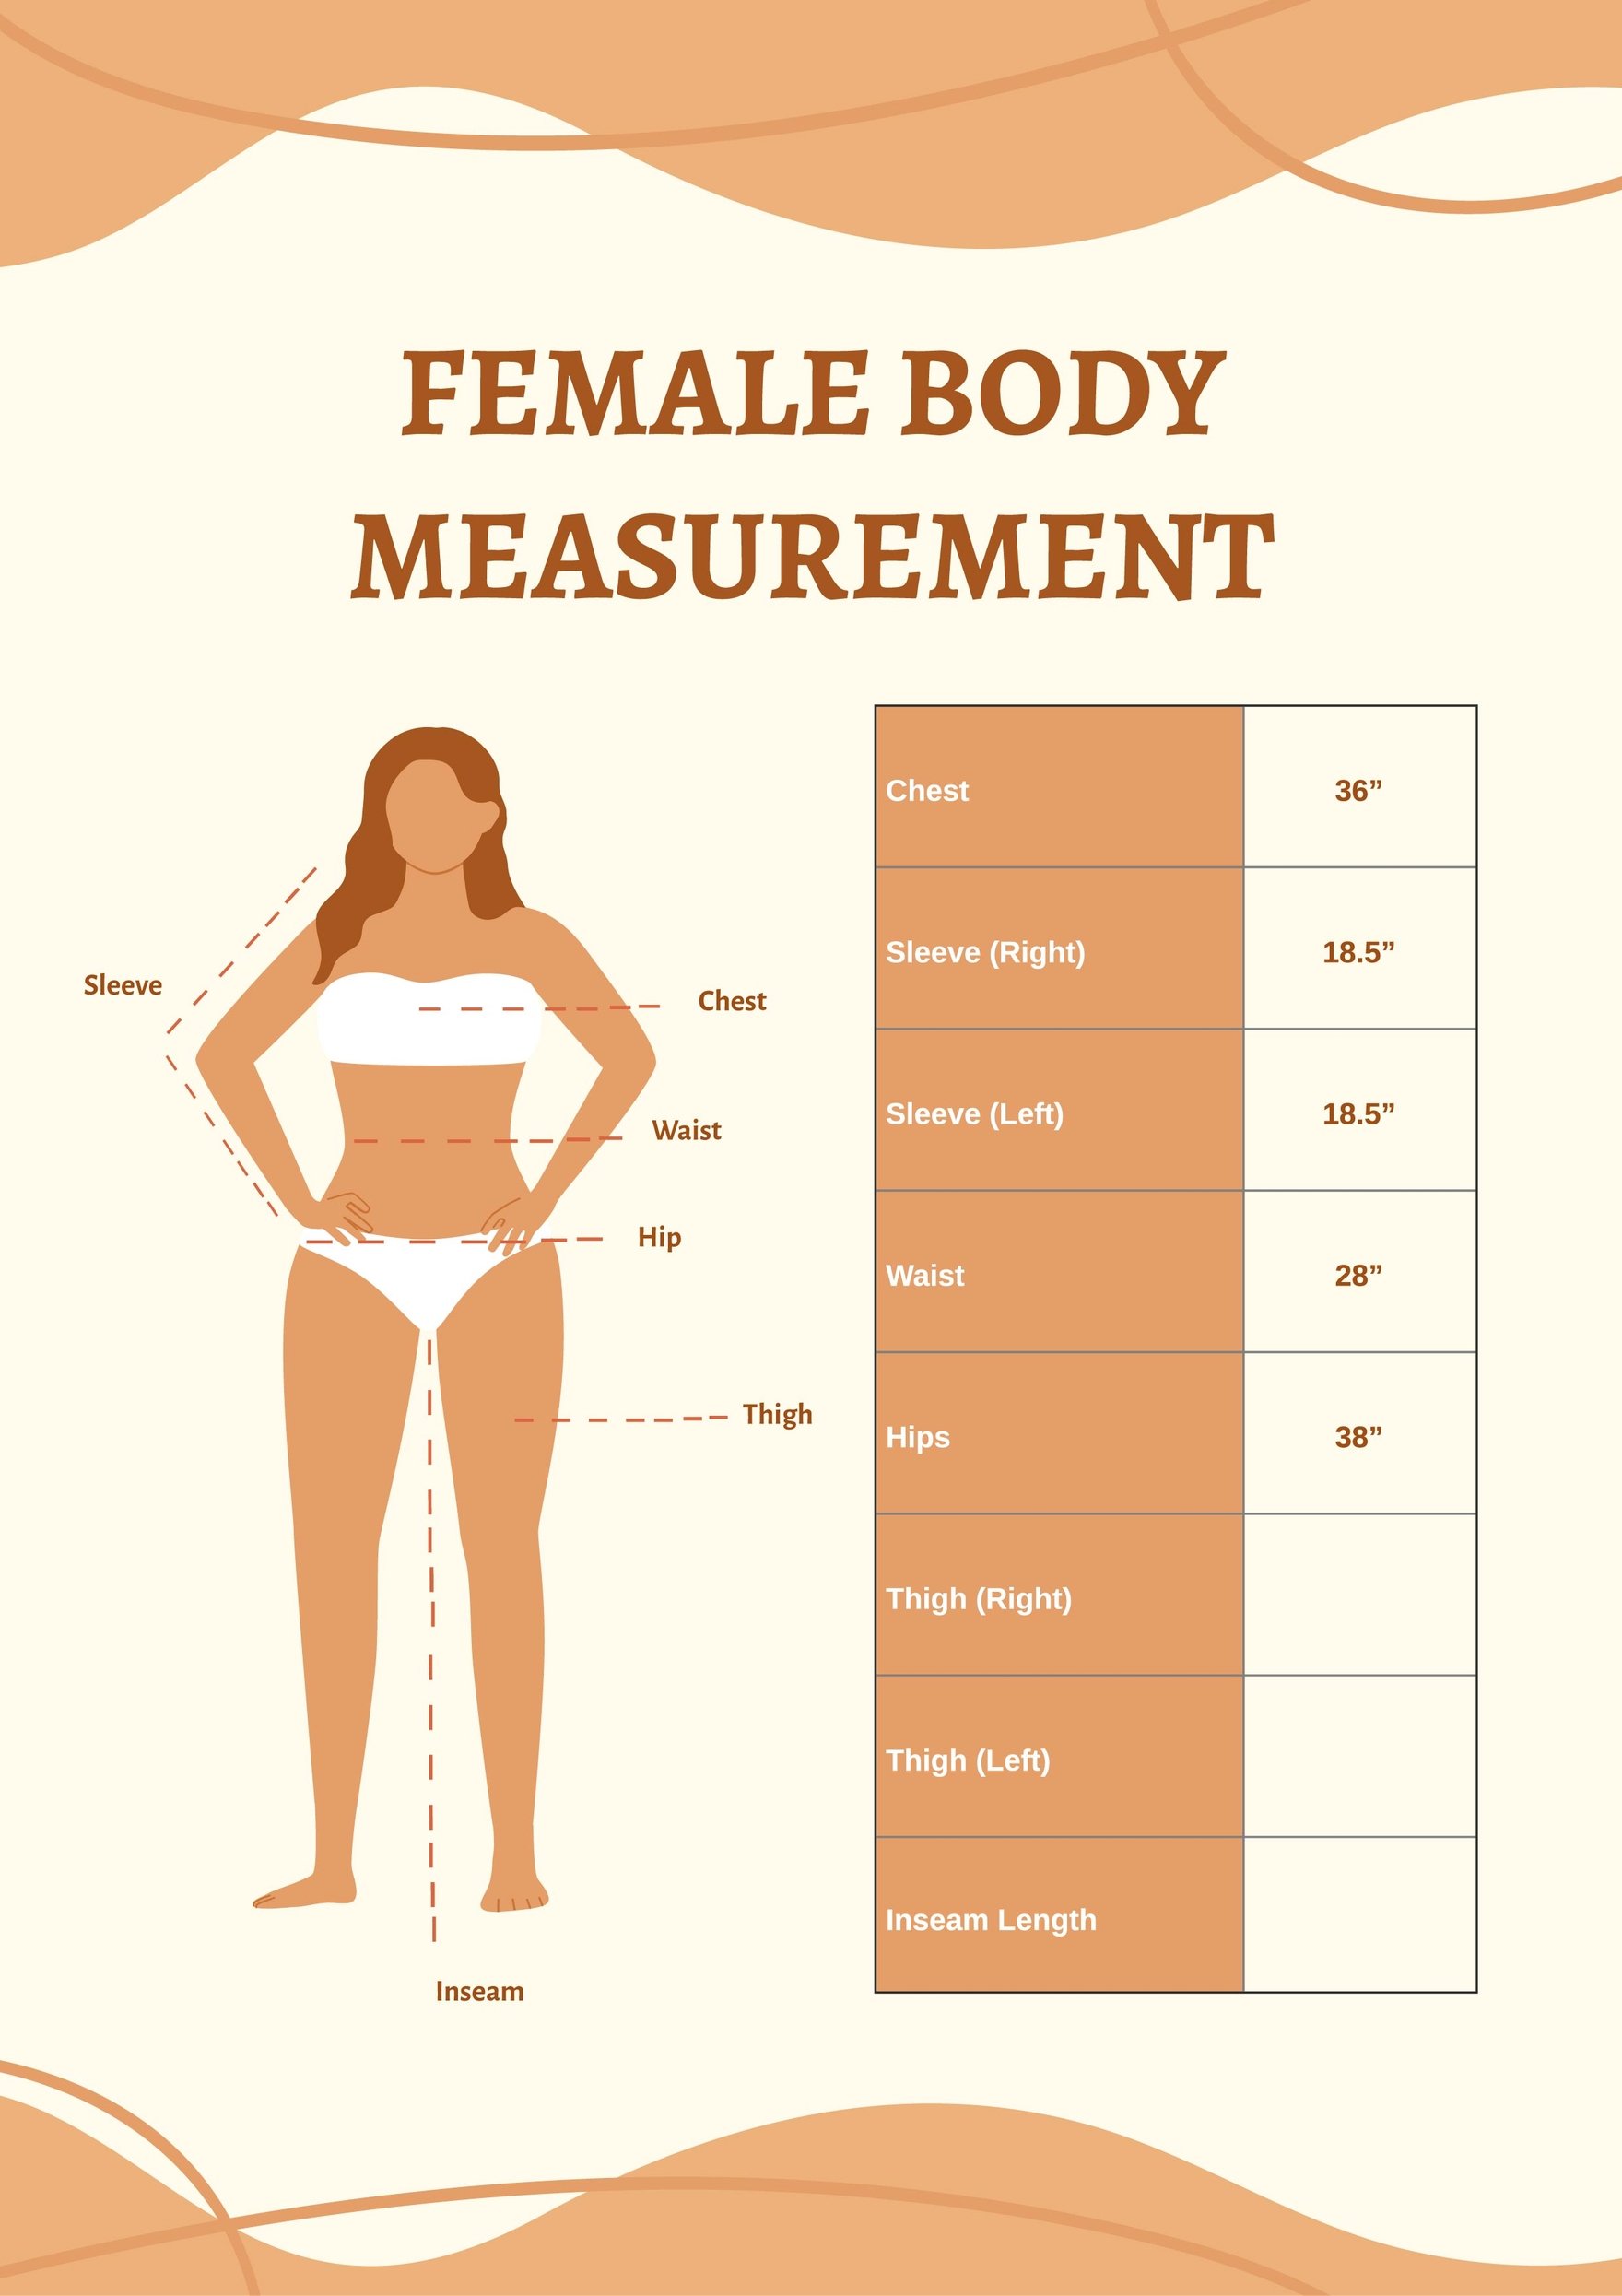 https://images.template.net/122739/female-body-measurement-chart-3exoo.jpg